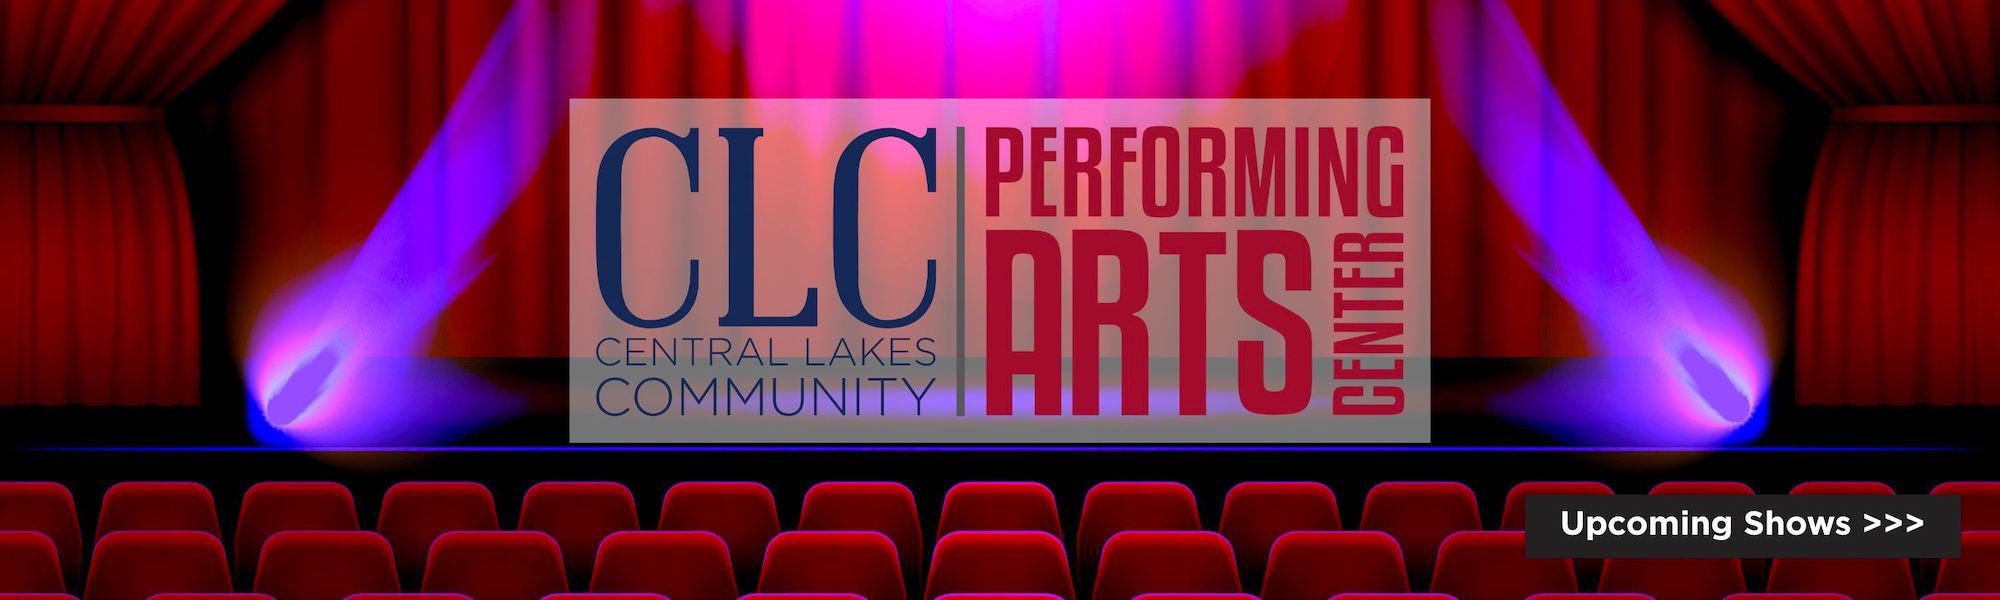 CLC Performing Arts Image Slide.